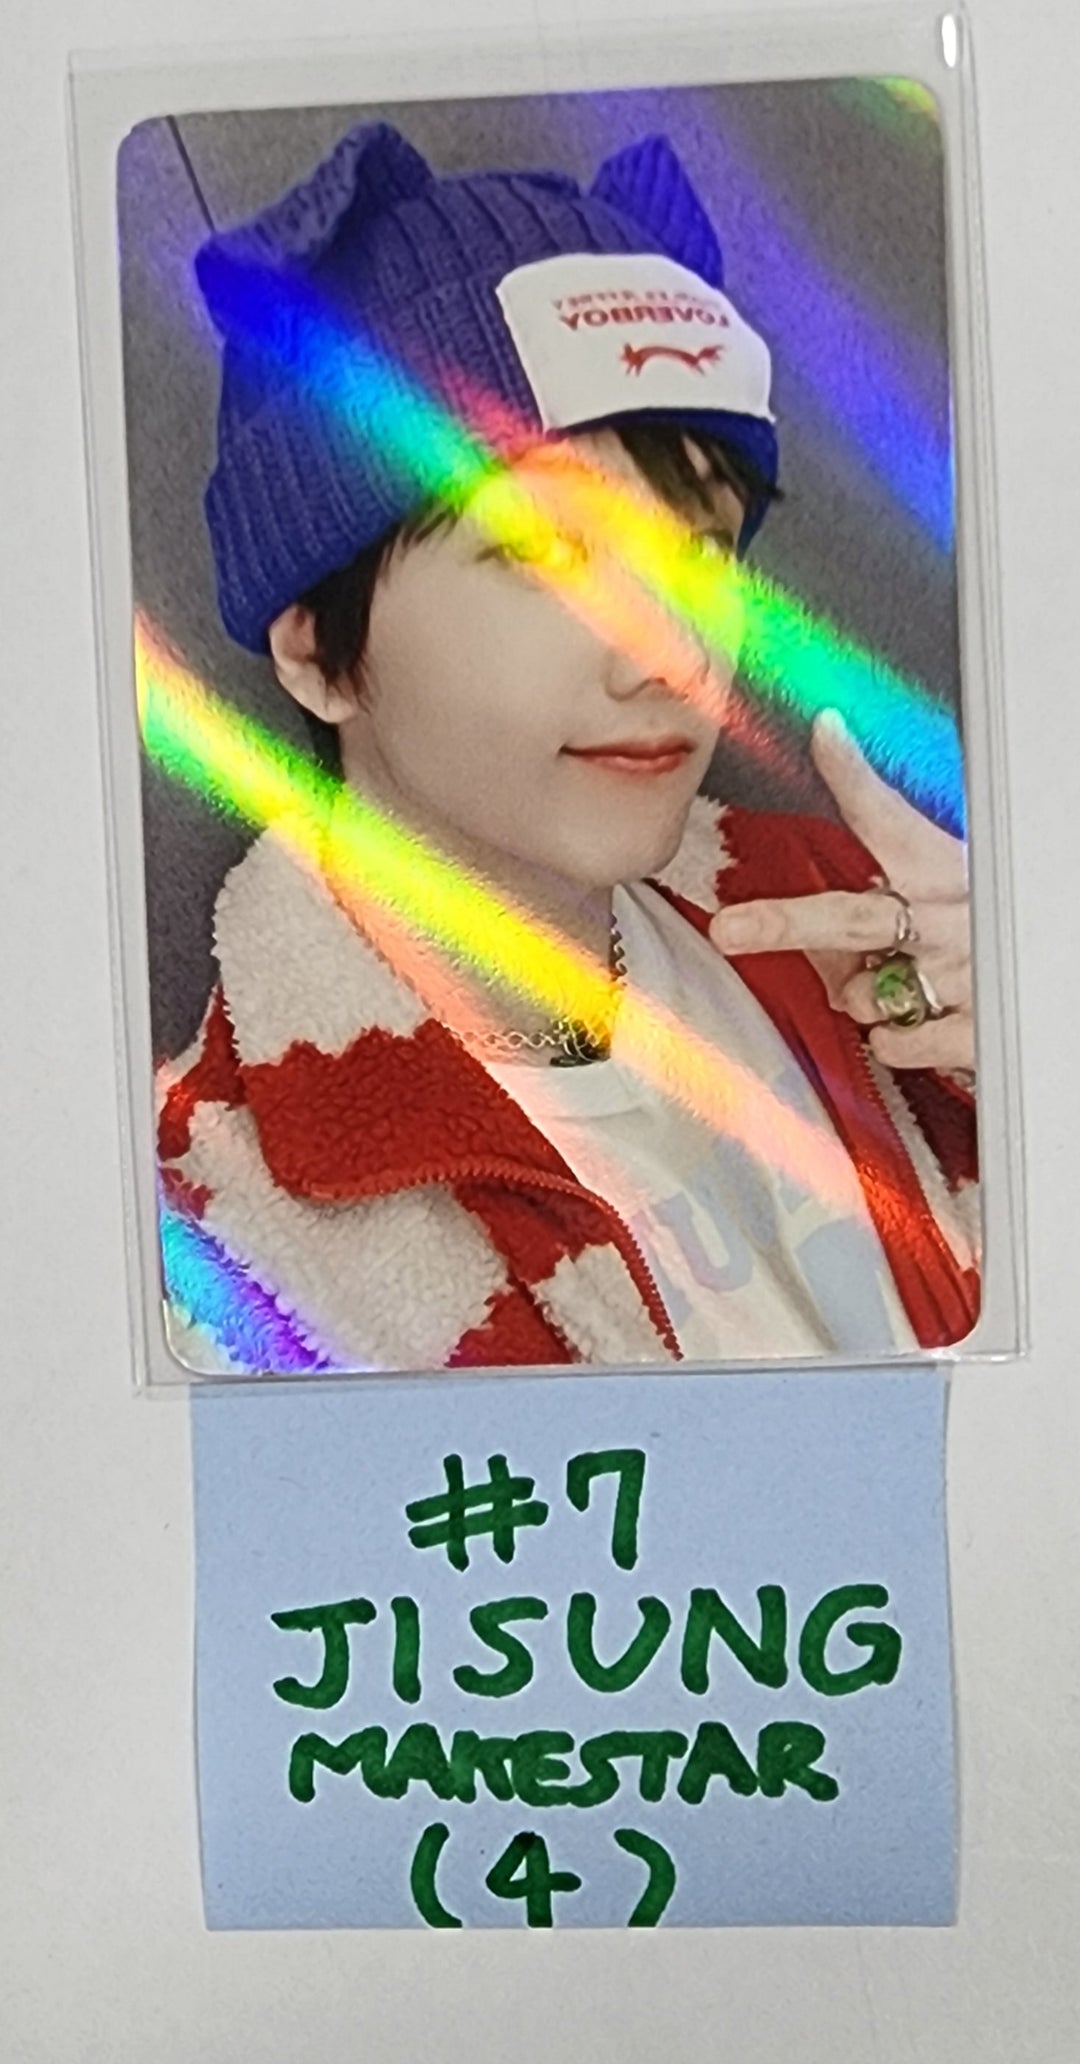 NCT DREAM "Candy" Winter Special Mini Album - Makestar Pre-Order Benefit Hologram Photocard [Photo Book Ver]